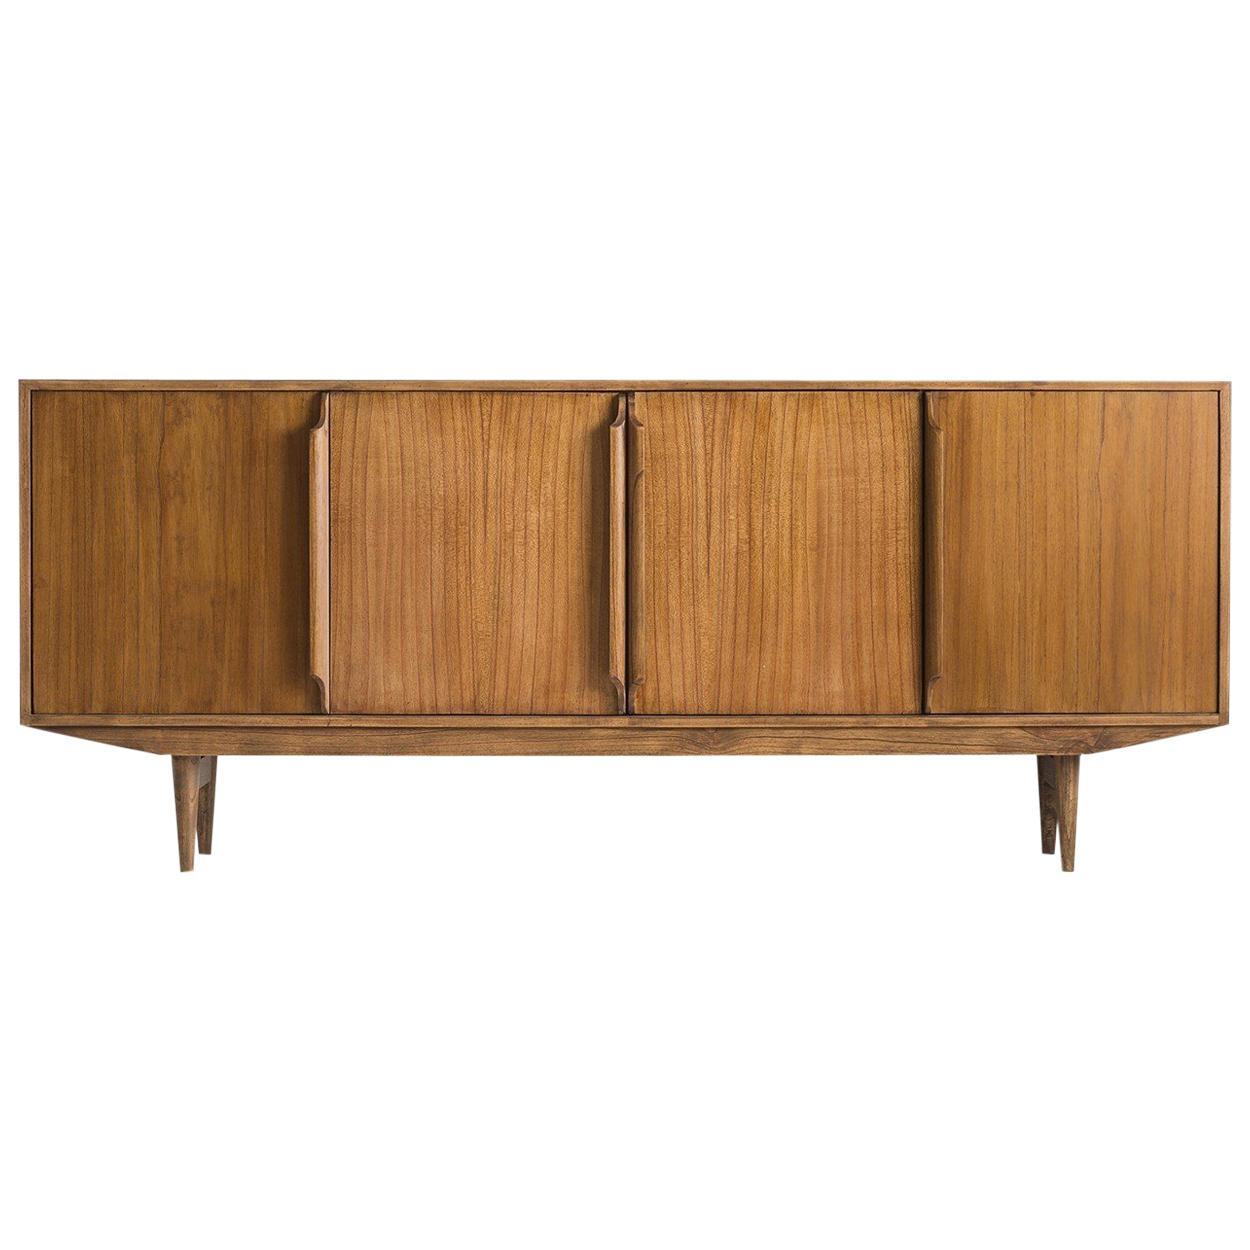 1960s Design and Danish Look Wooden Sideboard